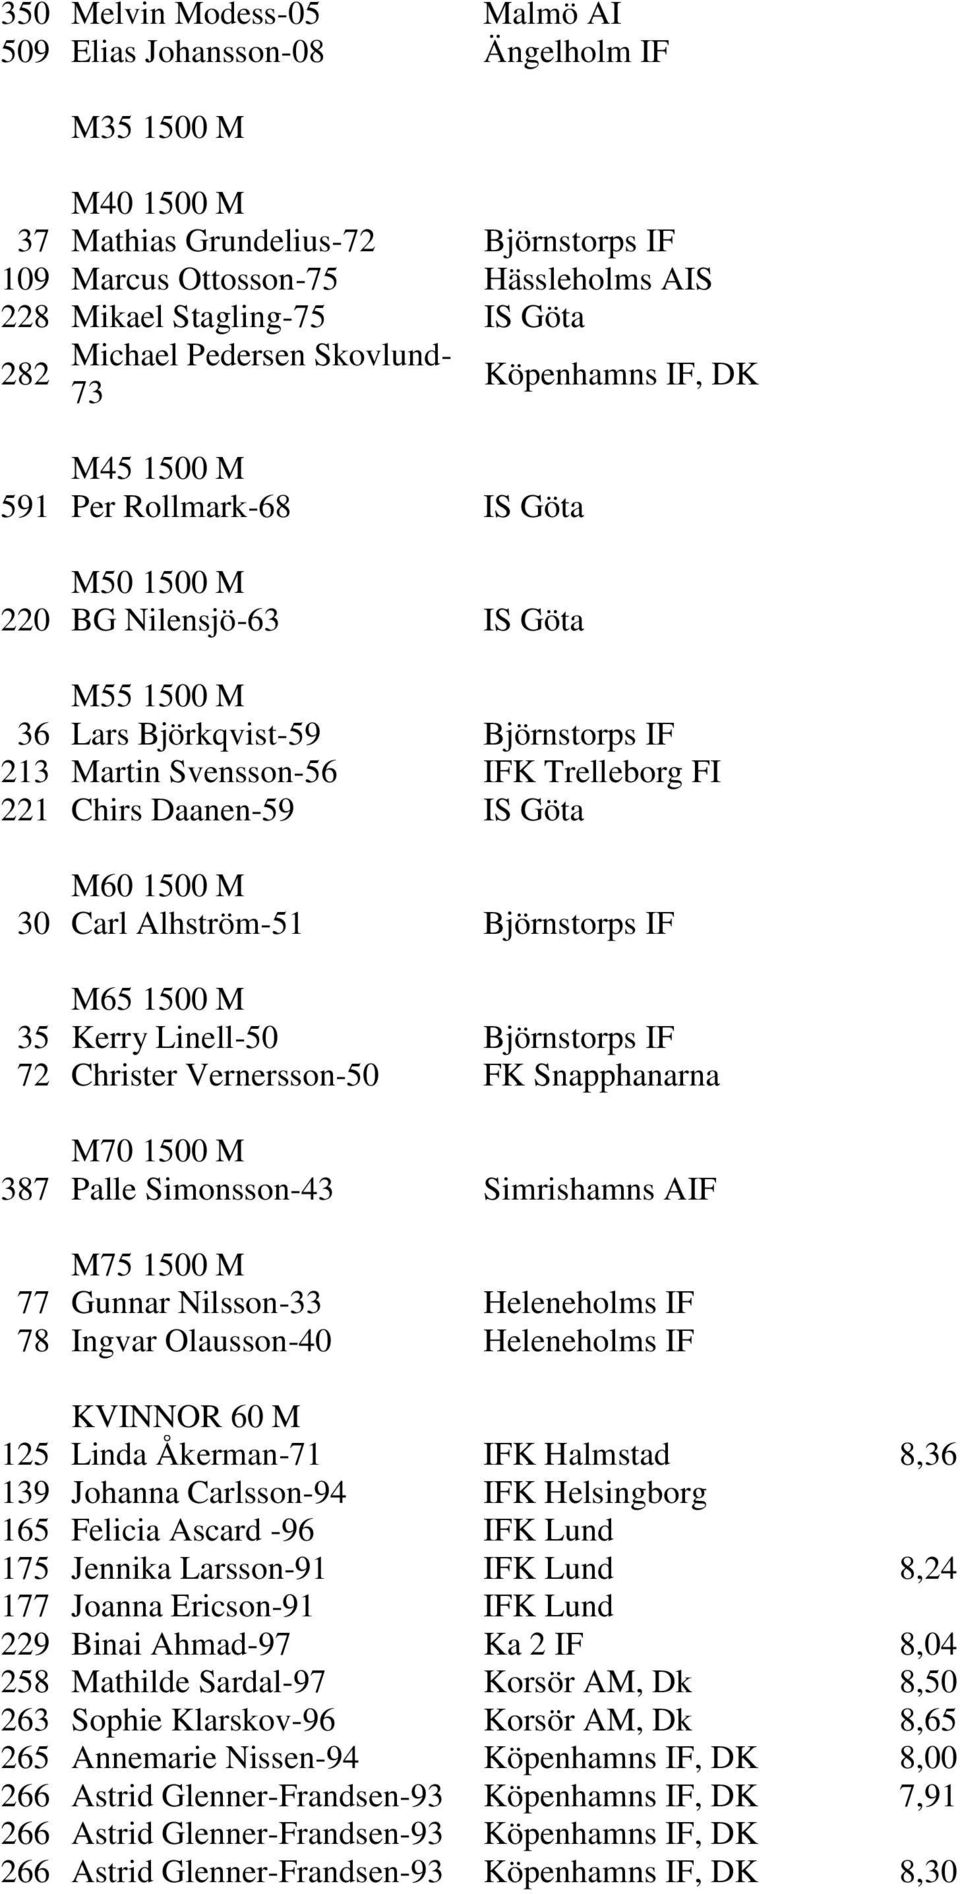 IFK Trelleborg FI 221 Chirs Daanen-59 IS Göta M60 1500 M 30 Carl Alhström-51 Björnstorps IF M65 1500 M 35 Kerry Linell-50 Björnstorps IF 72 Christer Vernersson-50 FK Snapphanarna M70 1500 M 387 Palle